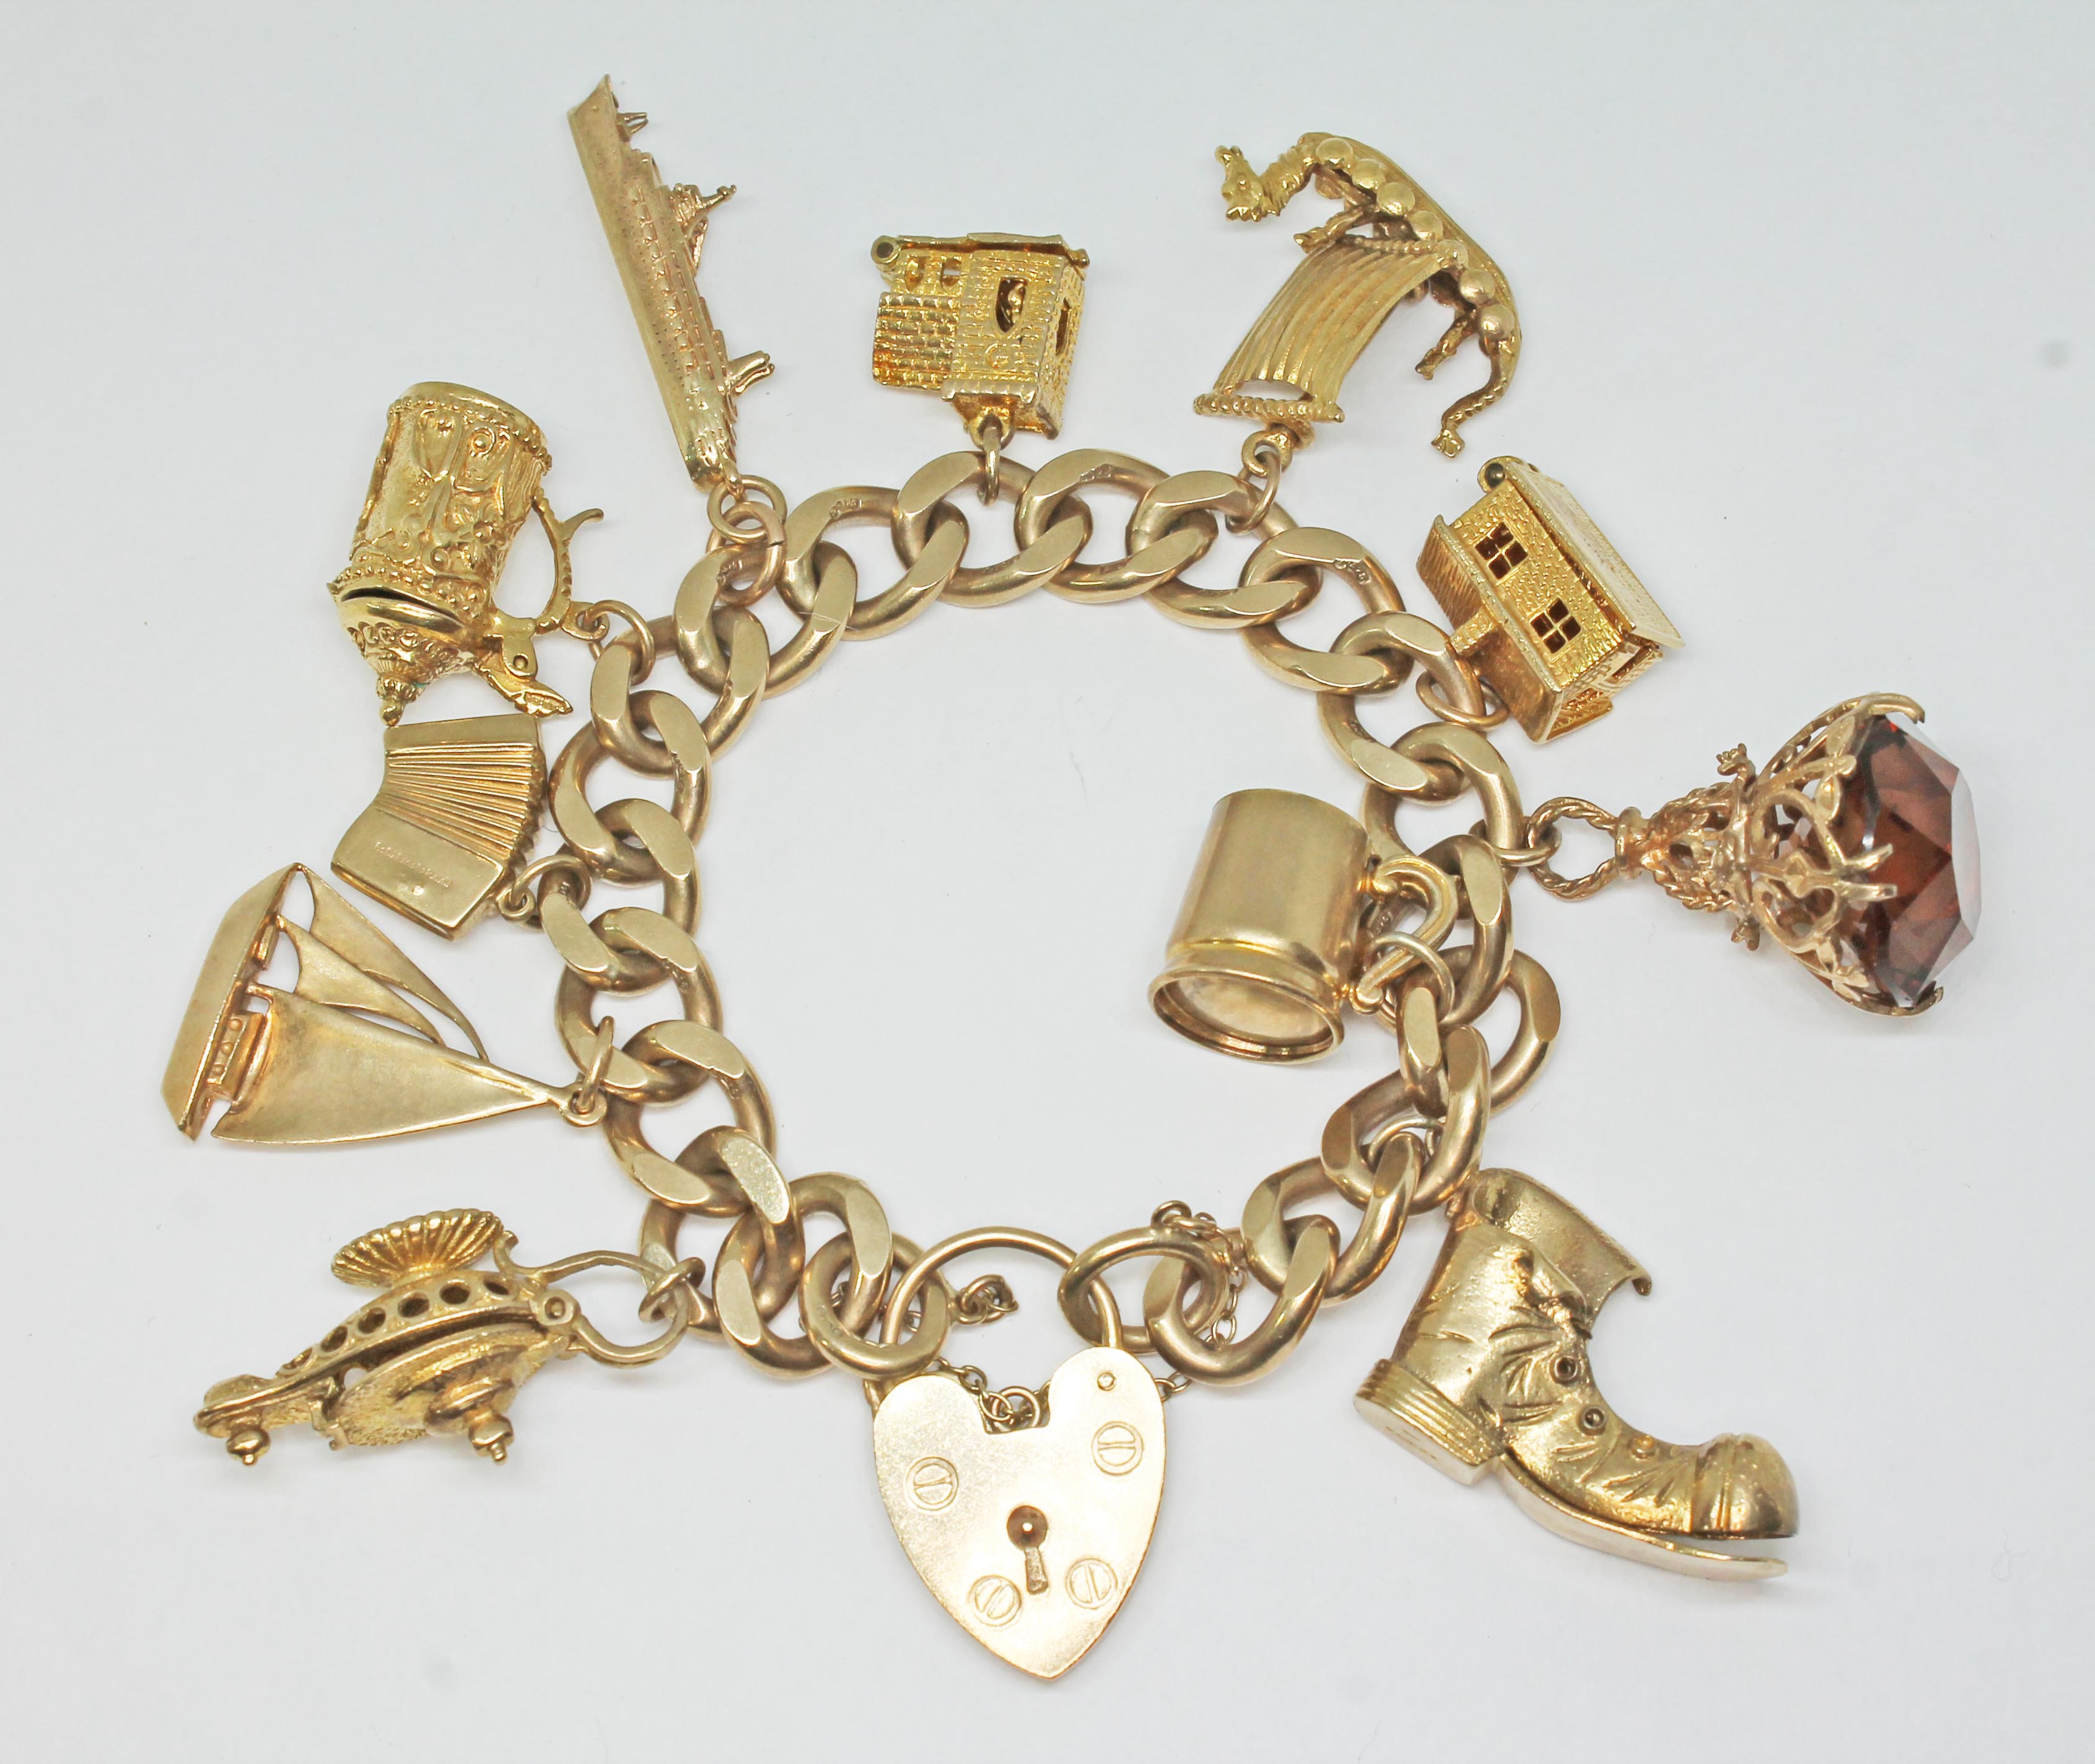 A 9ct gold charm bracelet, 10 hallmarked 9ct gold charms and hallmarked 9ct gold padlock clasp,